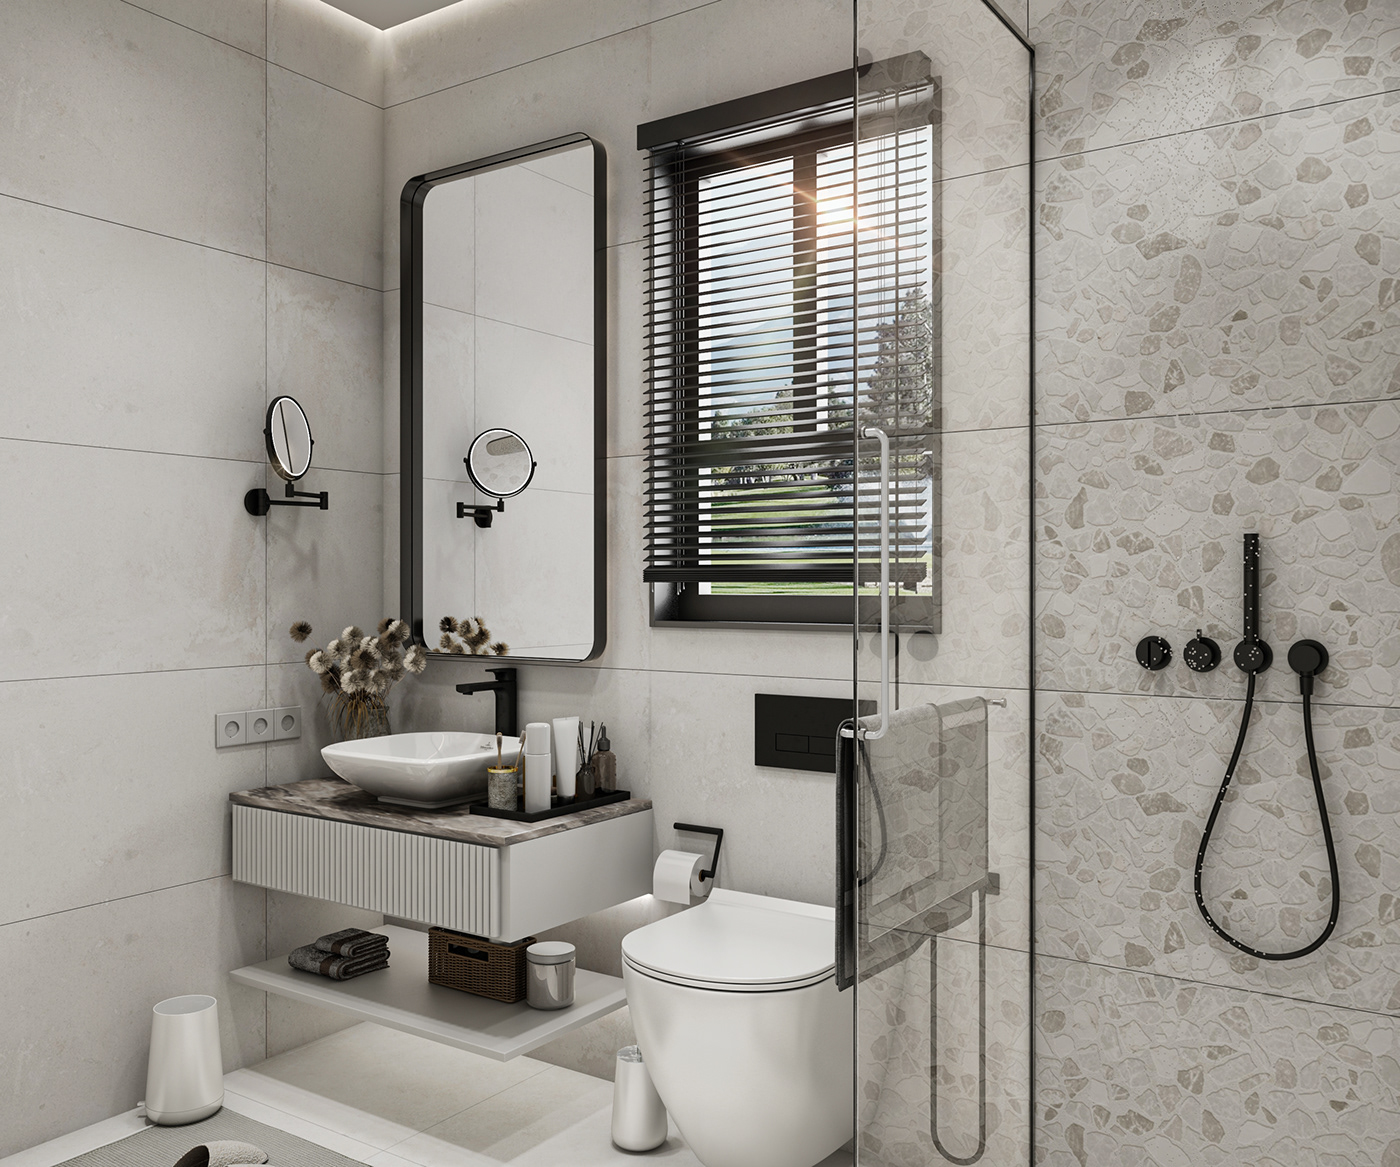 Sink bathroom interior design  visualization bathroom design Villa KSA Qatar 3D UAE